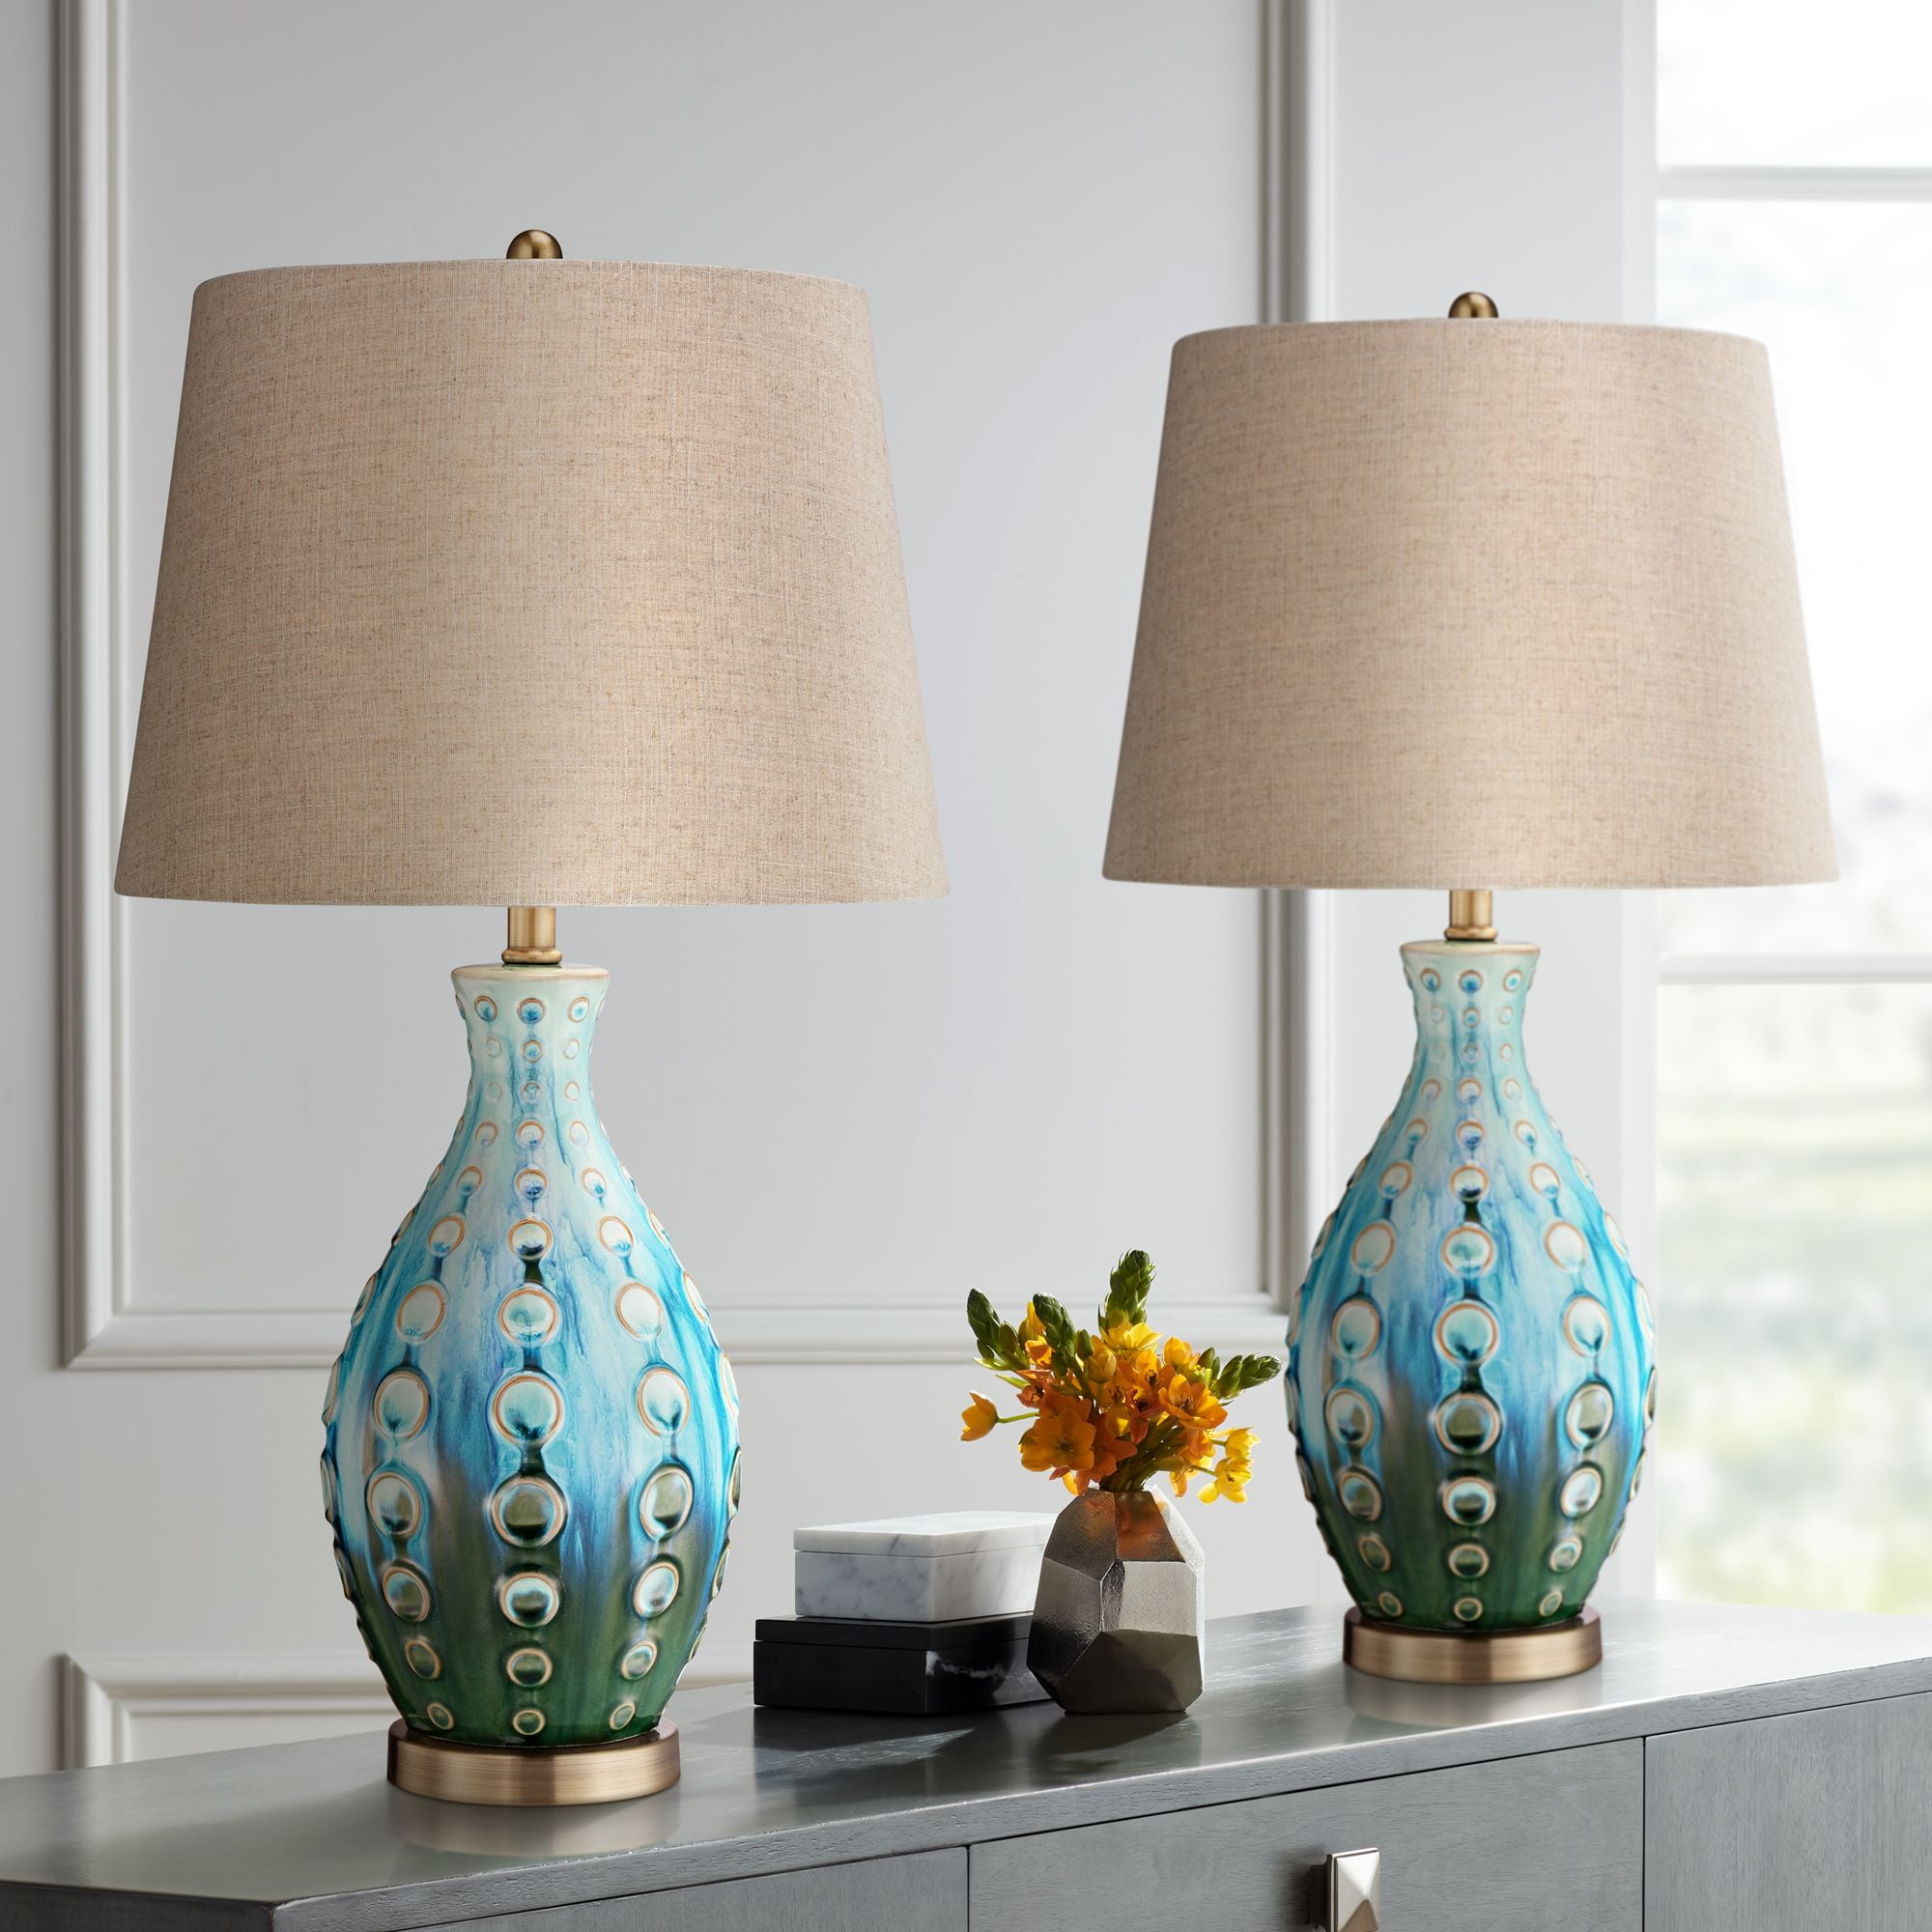 360 Lighting Mid Century Modern Table Lamps Set of 2 Ceramic Teal